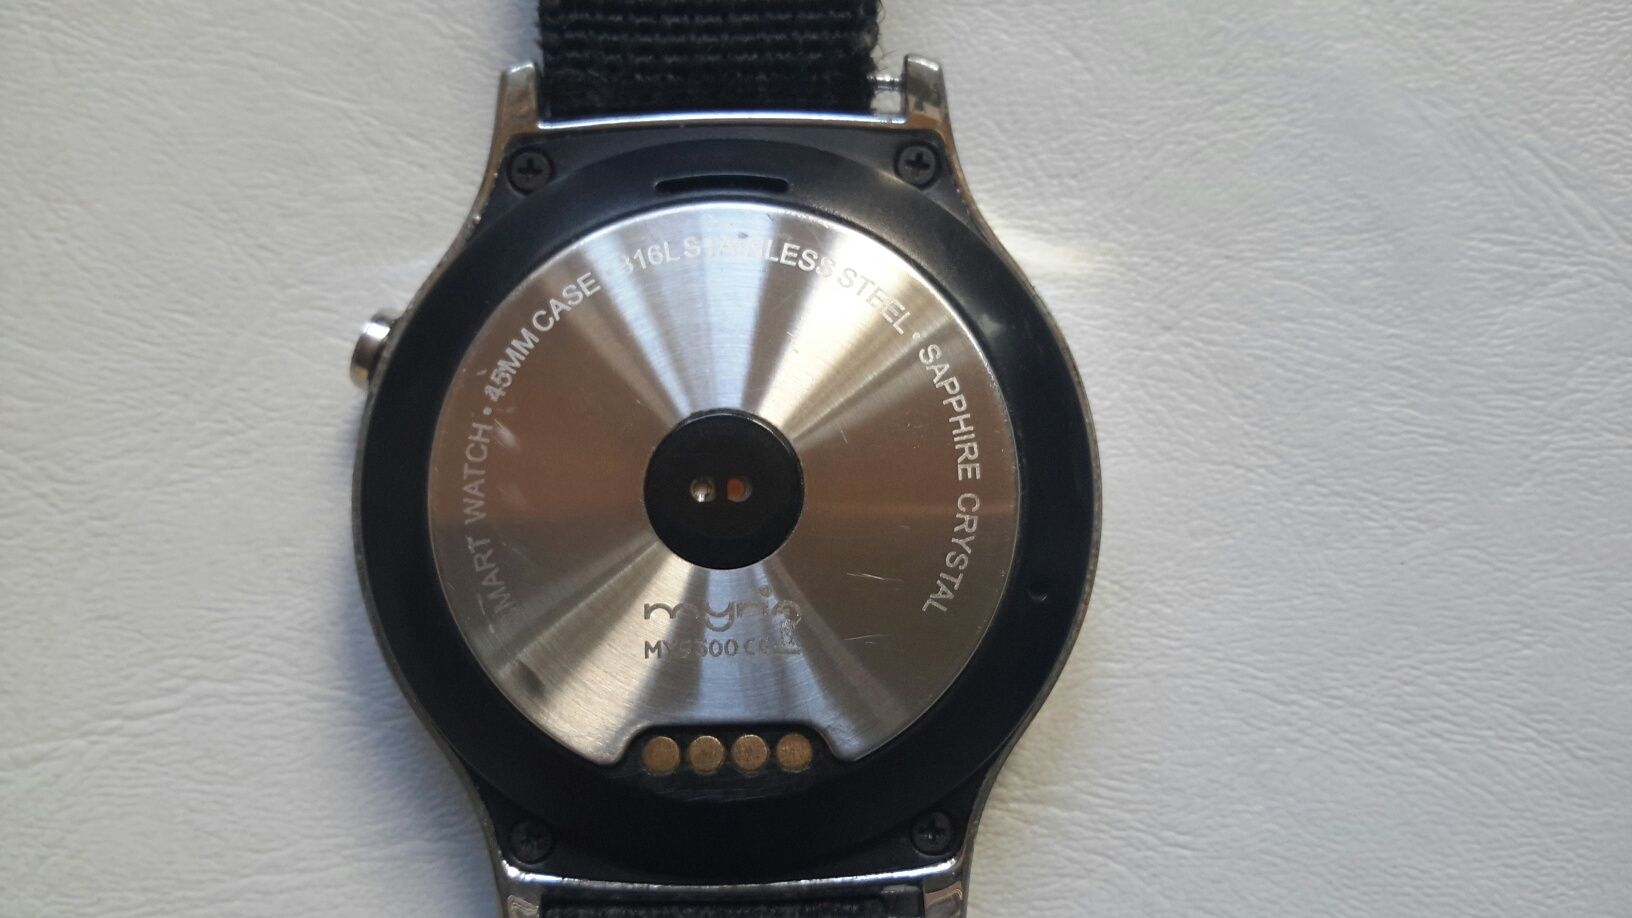 Smartwatch Mira 9500 display zafir